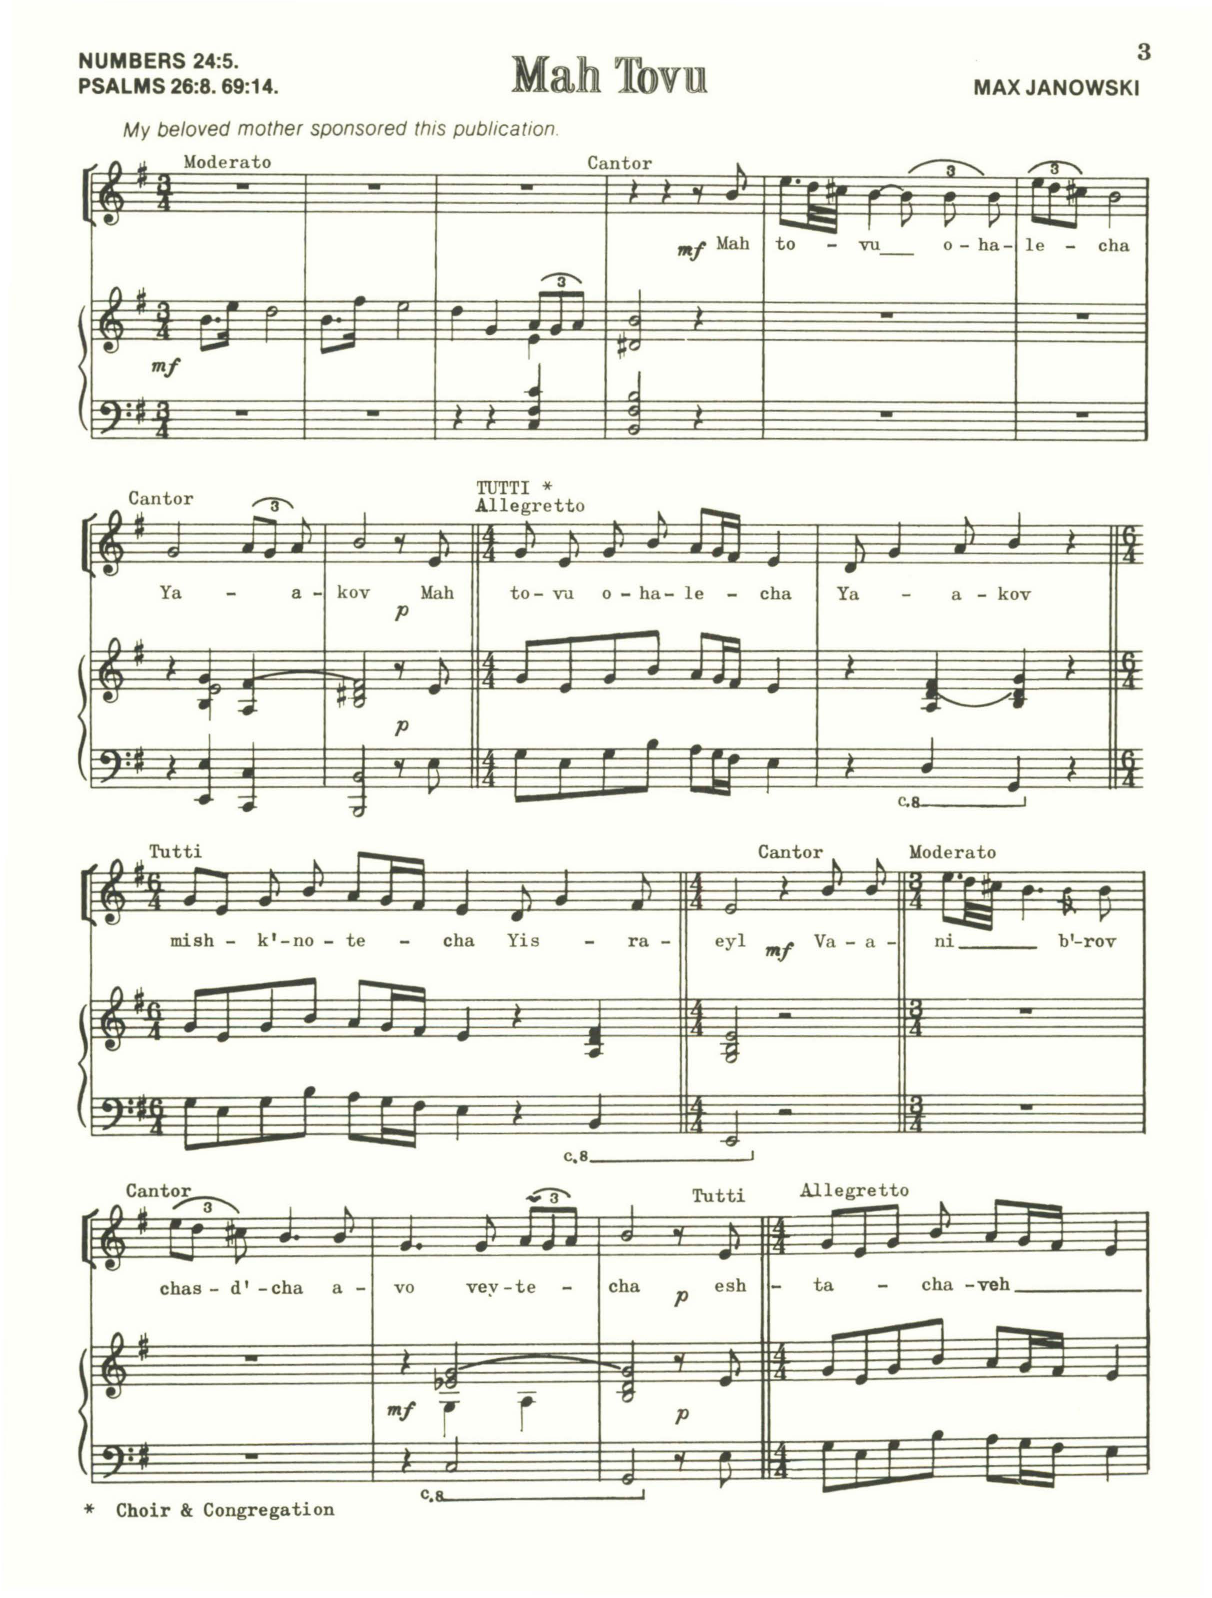 Max Janowski Shabbat Service For Saturday Morning Sheet Music Notes & Chords for SATB Choir - Download or Print PDF